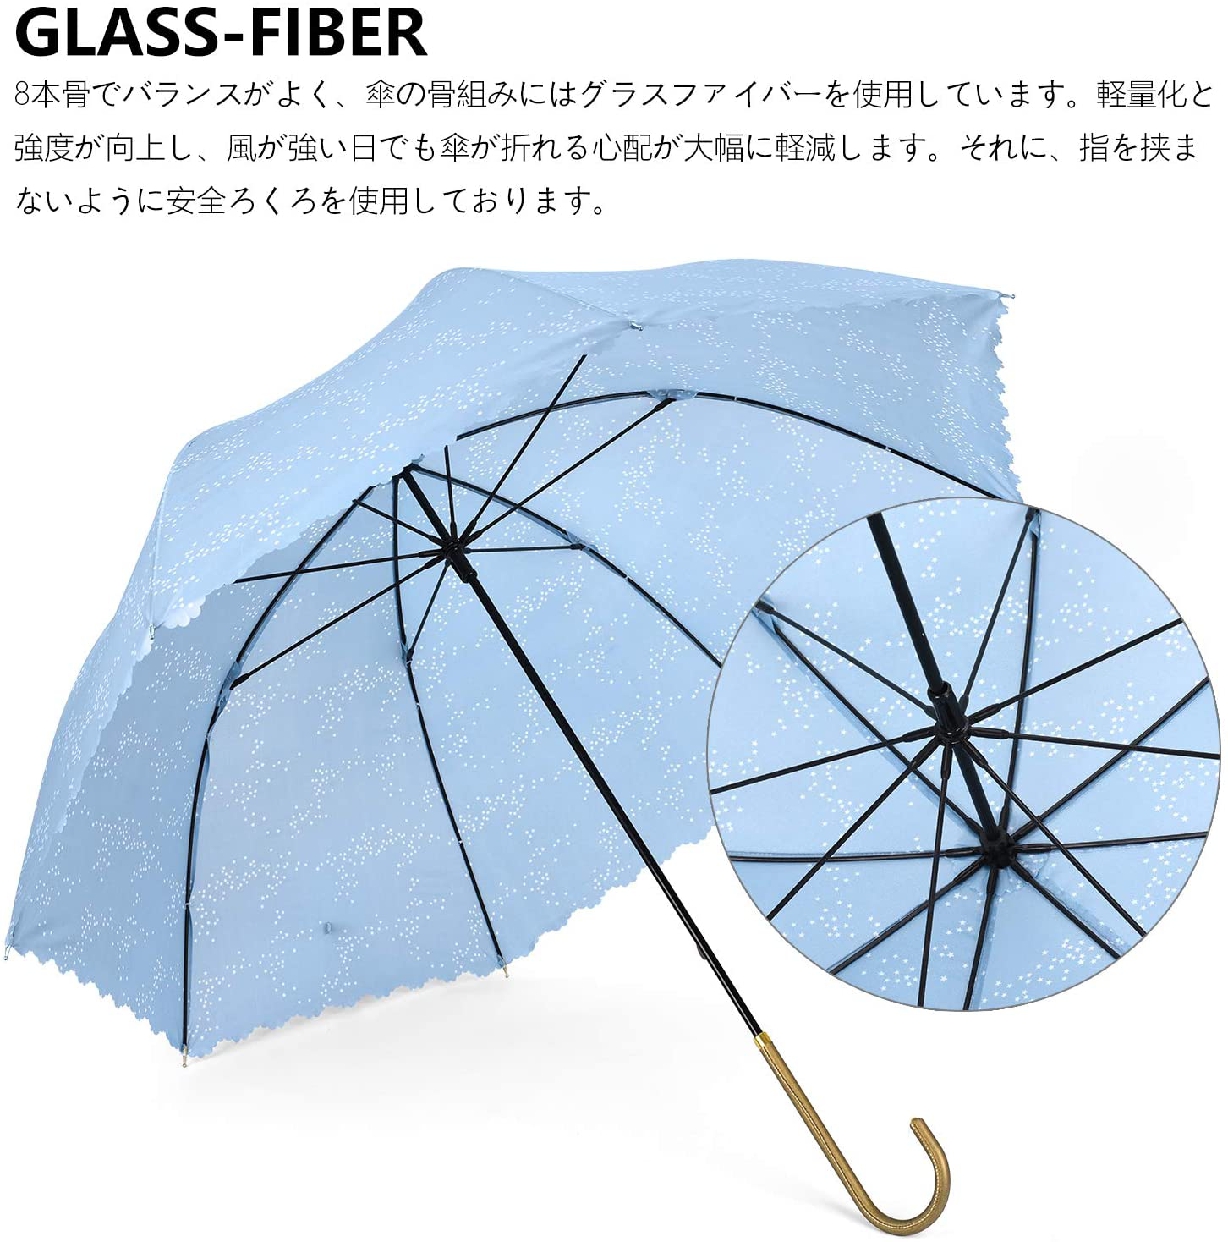 Bibury 新強化グラスファイバー傘骨 長傘の商品画像4 